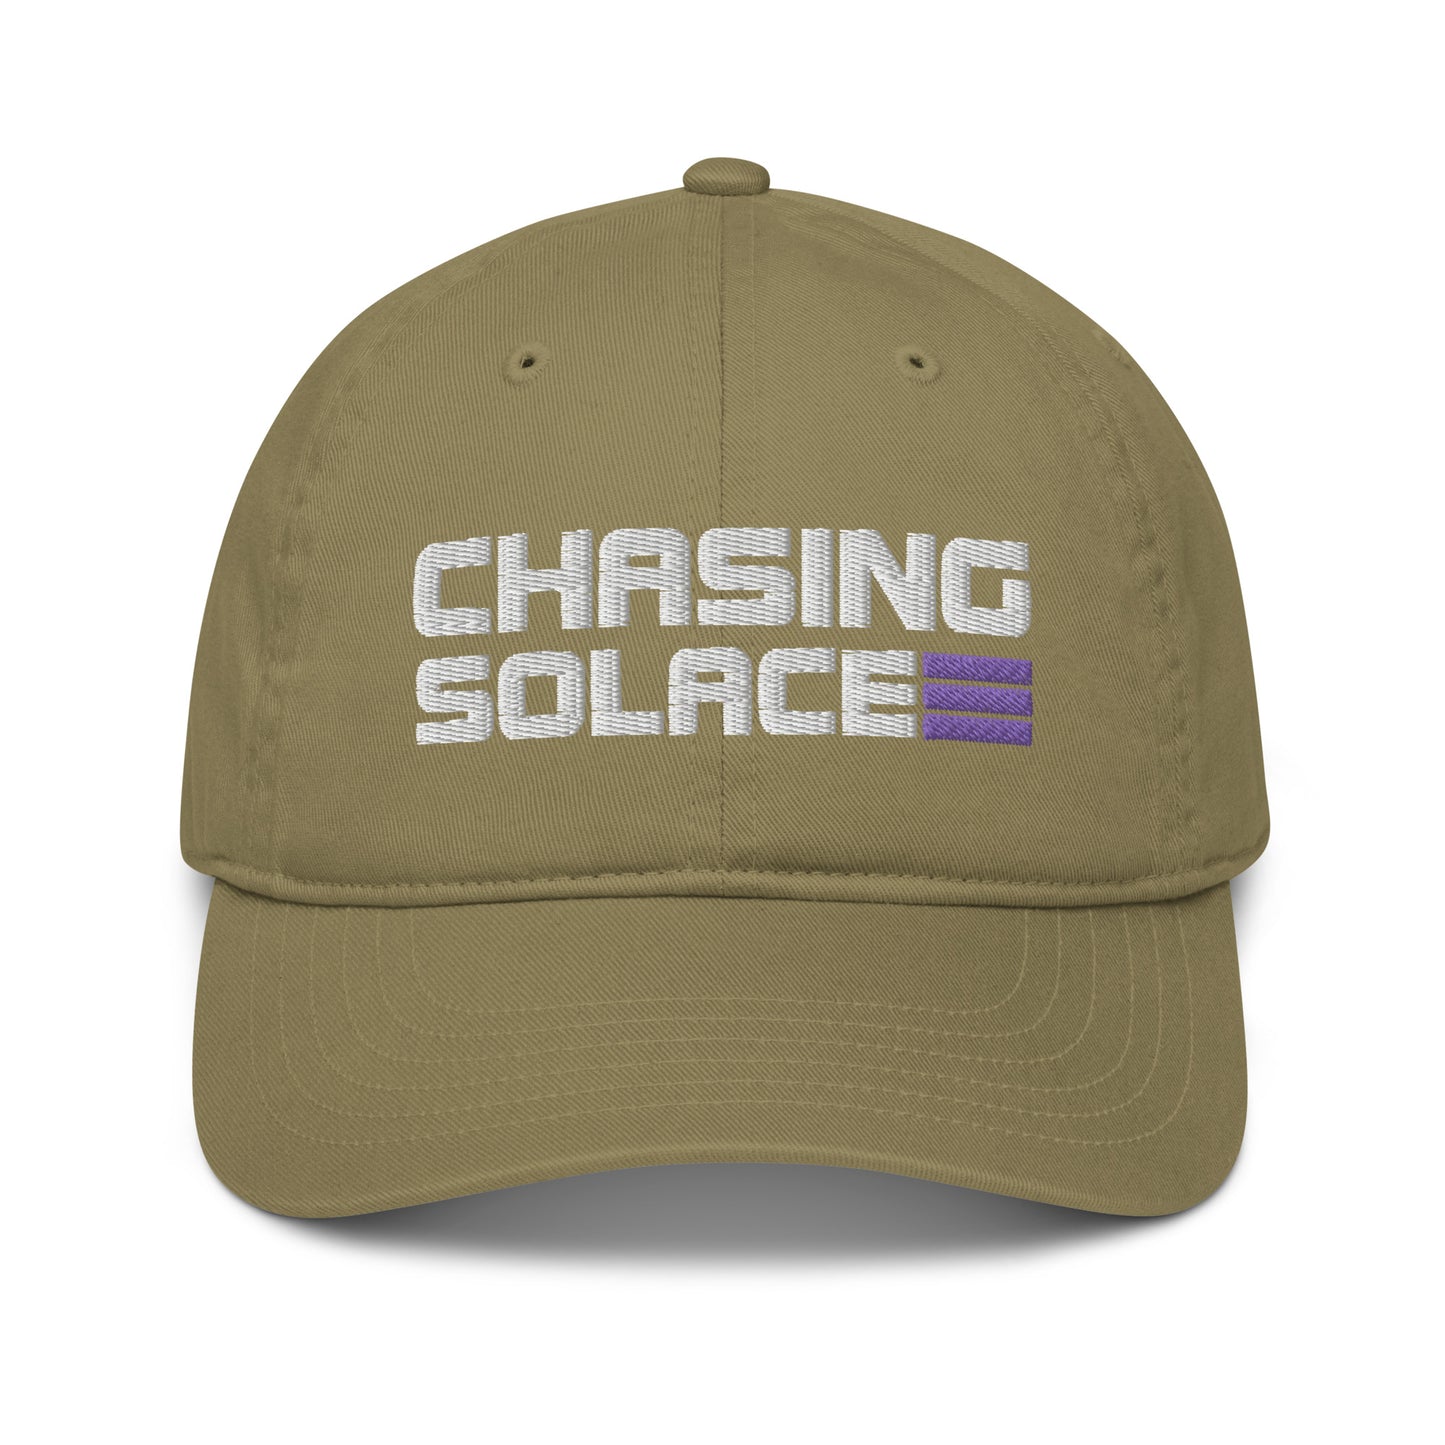 Chasing Solace (organic peaked cap)